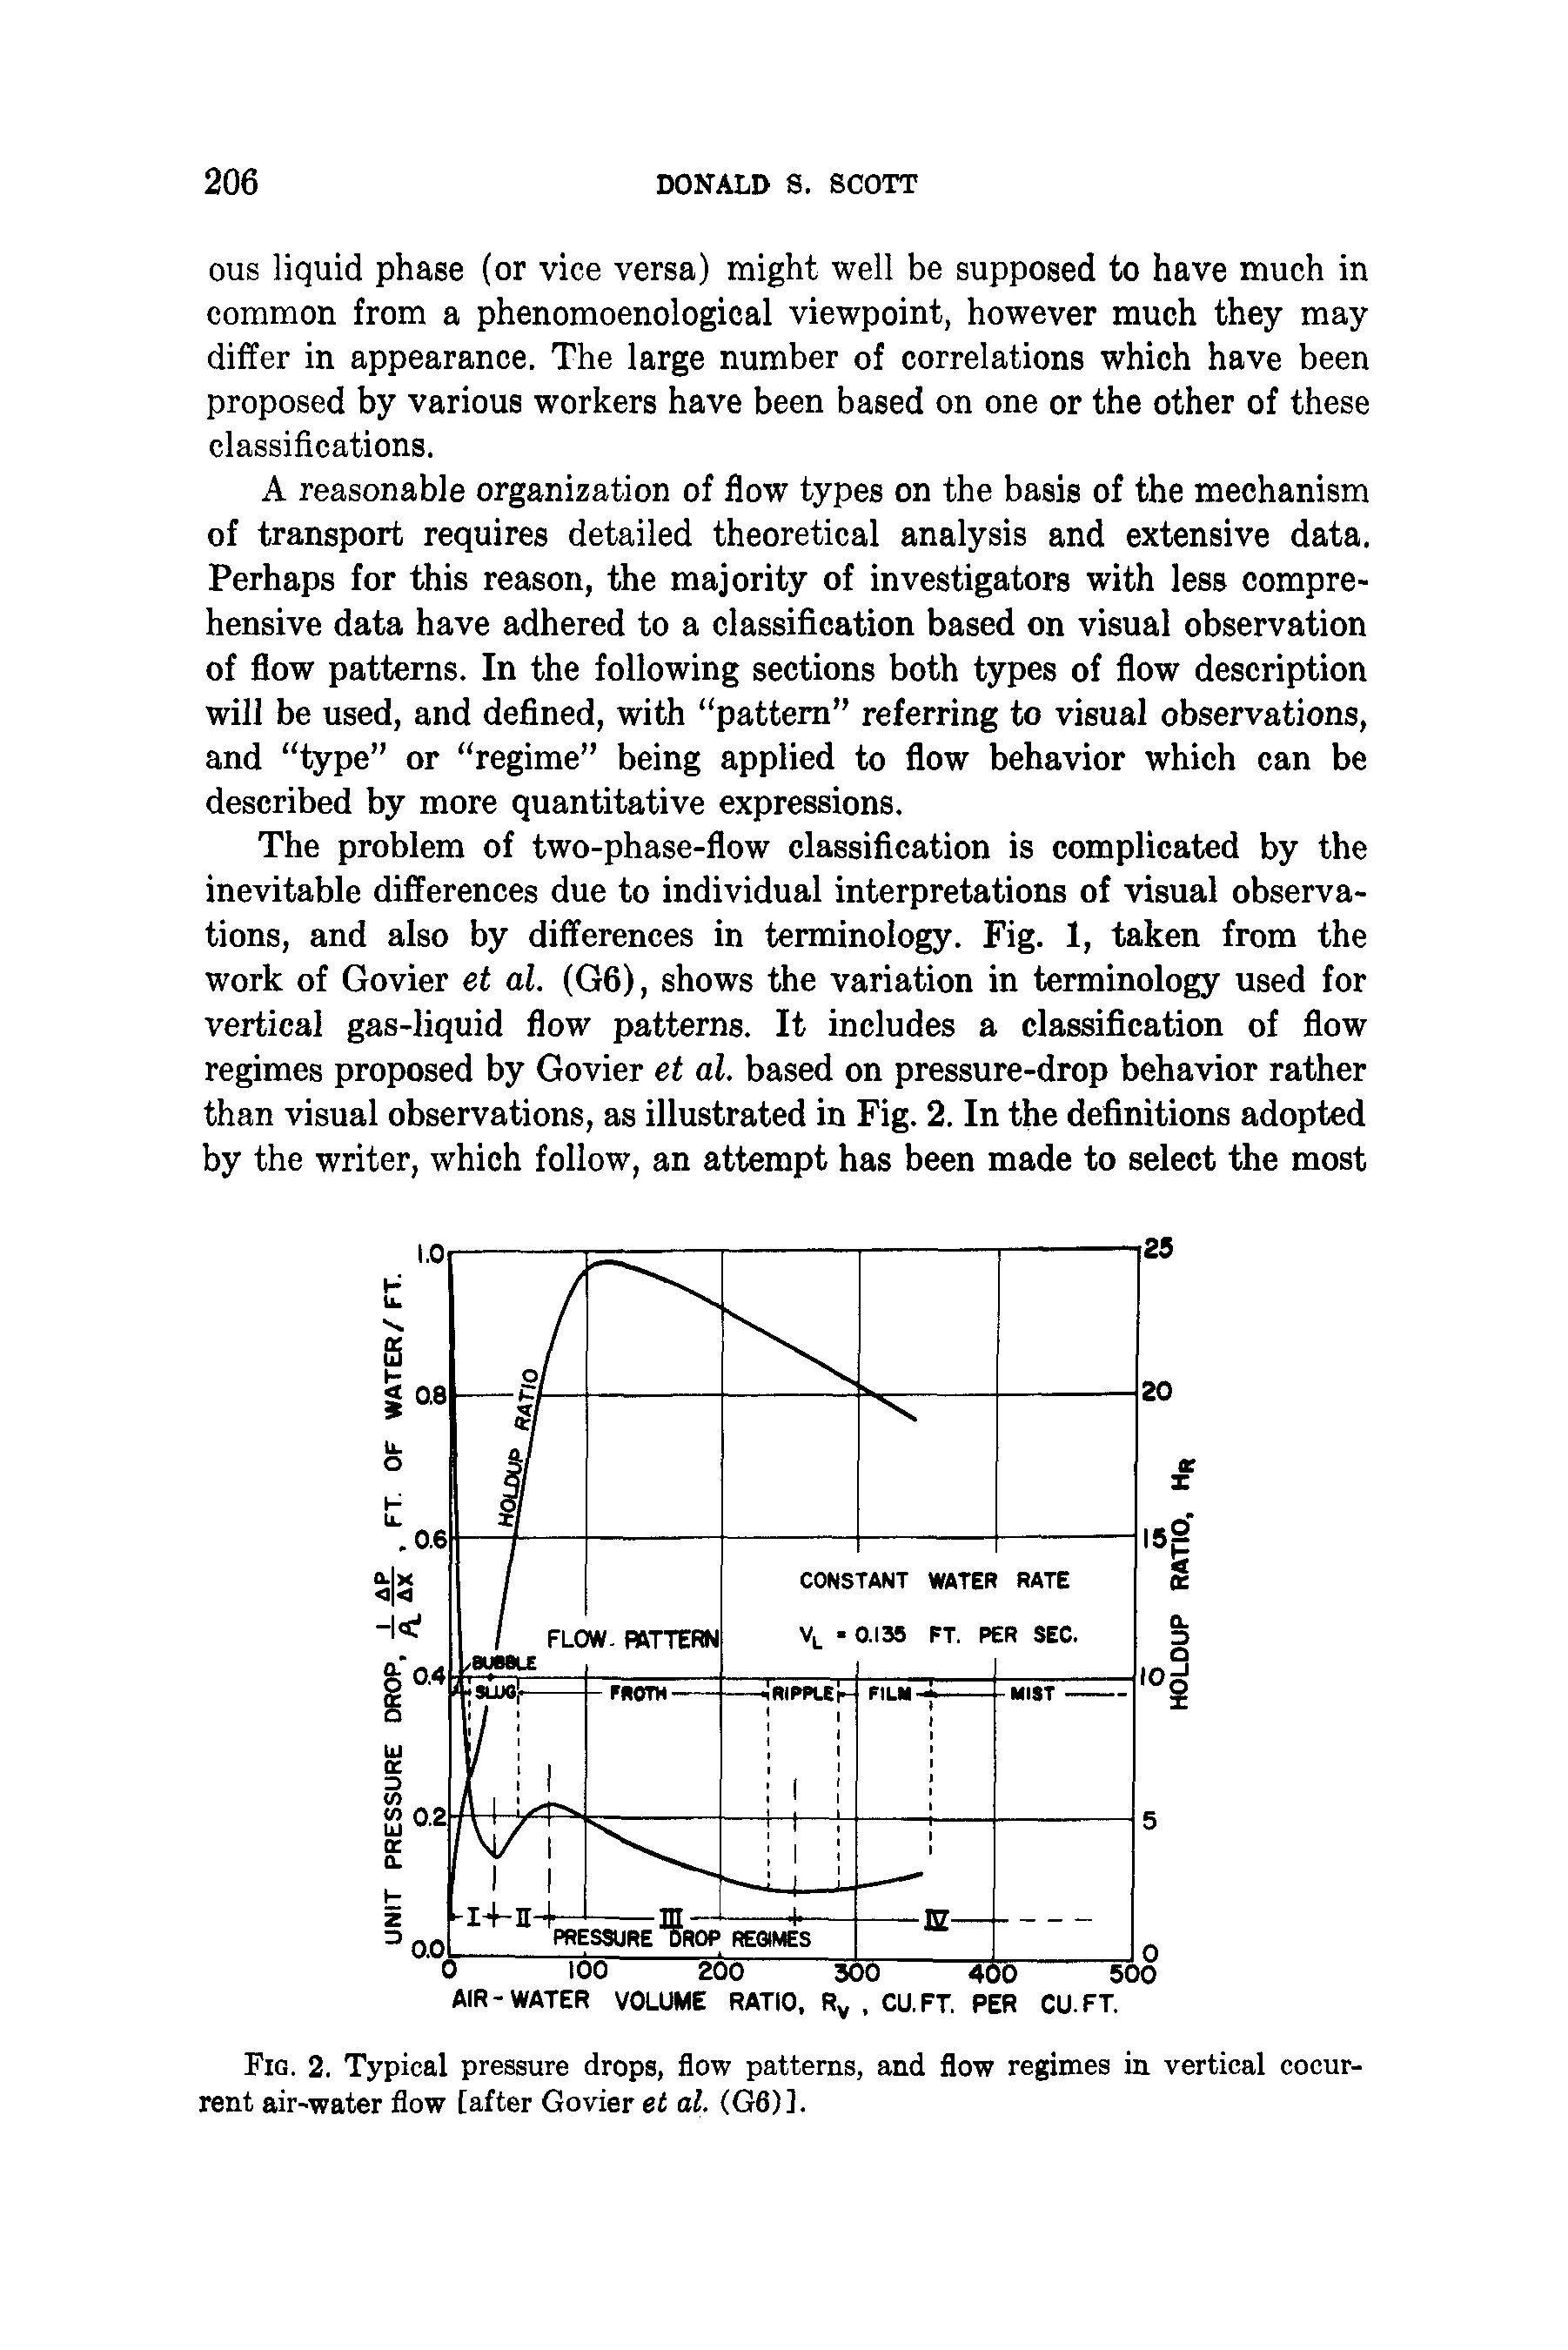 Fig. 2. Typical pressure drops, flow patterns, and flow regimes in vertical cocurrent air-water flow [after Govier et al. (G6)l.